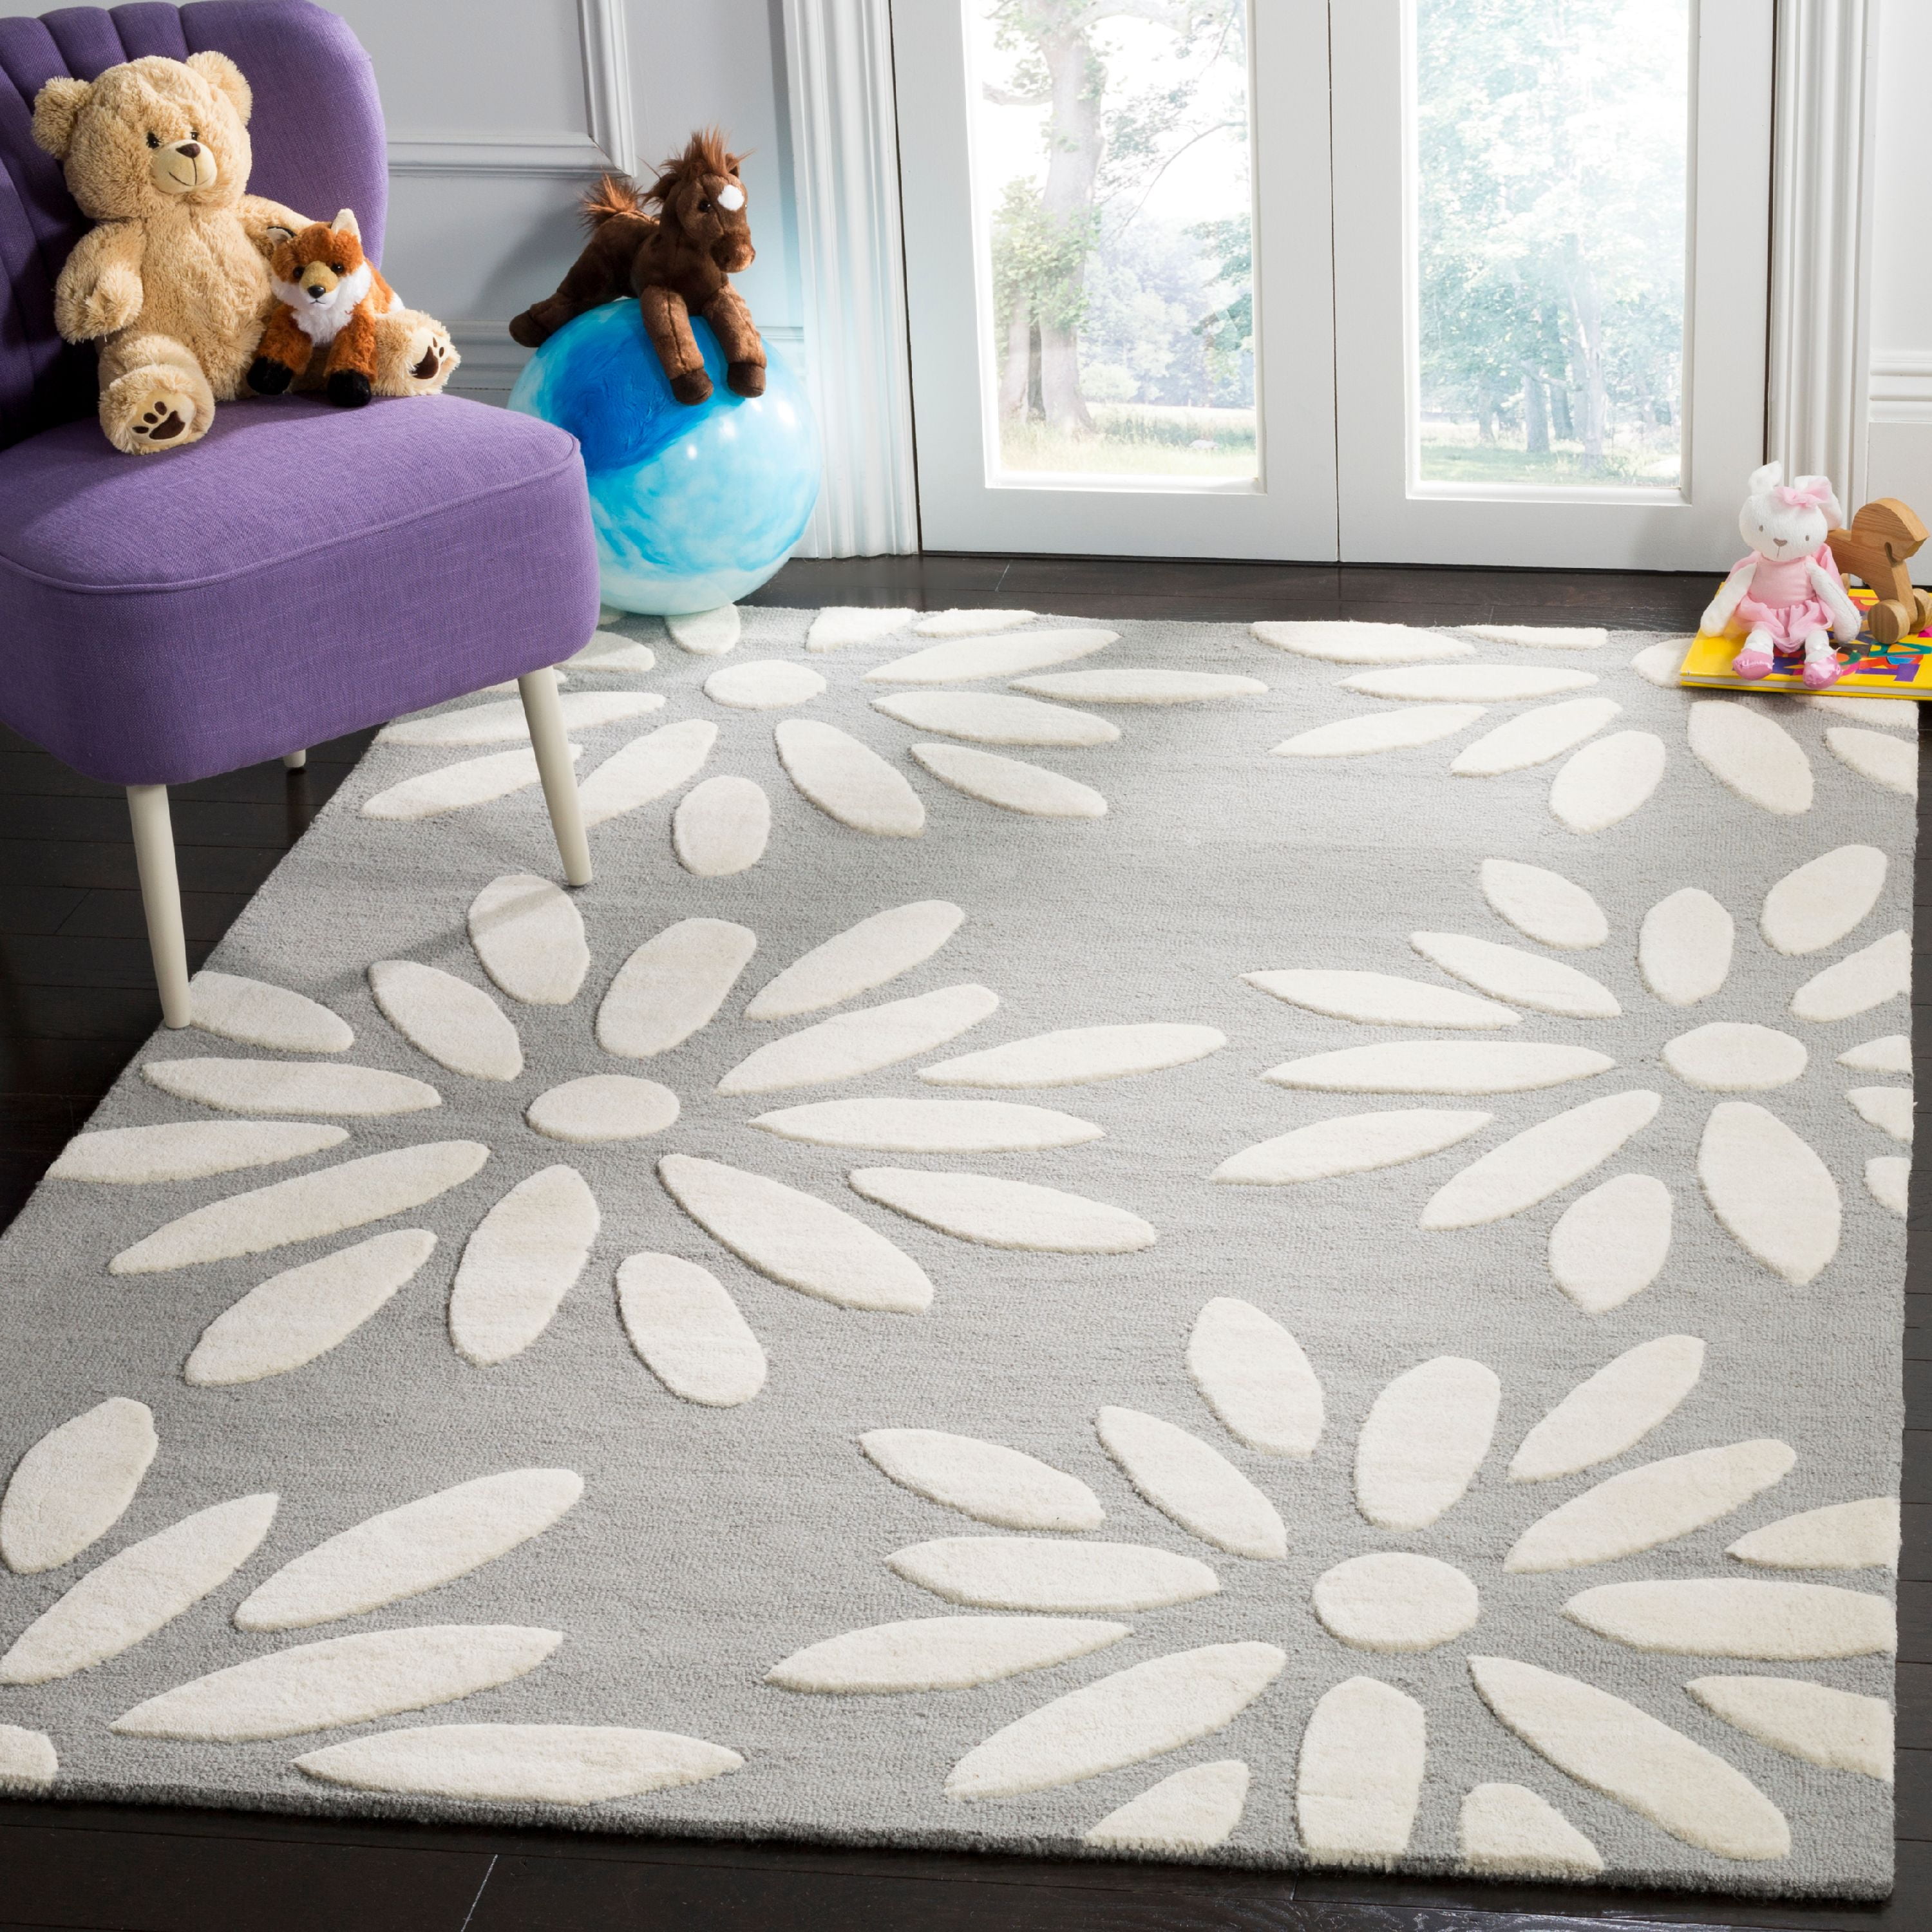 Details about   Daisy Flower Non Slip Hallway Runner Rug Soft Carpet Comfort Kitchen Floor Mat 